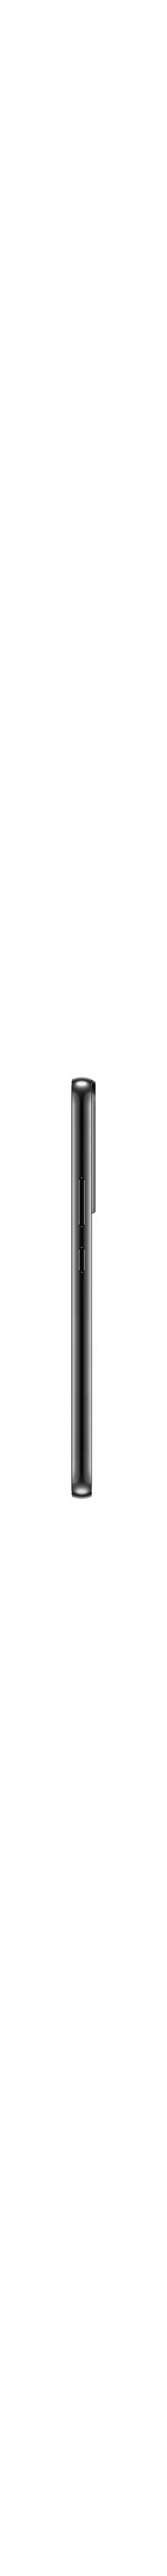 Samsung Galaxy S22+ - 5G Smartphone - Dual-SIM - RAM 8 GB / 128 GB - OLED-Display - 6.6 - 2340 x 1080 Pixel (120 Hz) - Triple-Kamera 50 MP, 12 MP, 10 MP - front camera 10 MP - Phantomschwarz